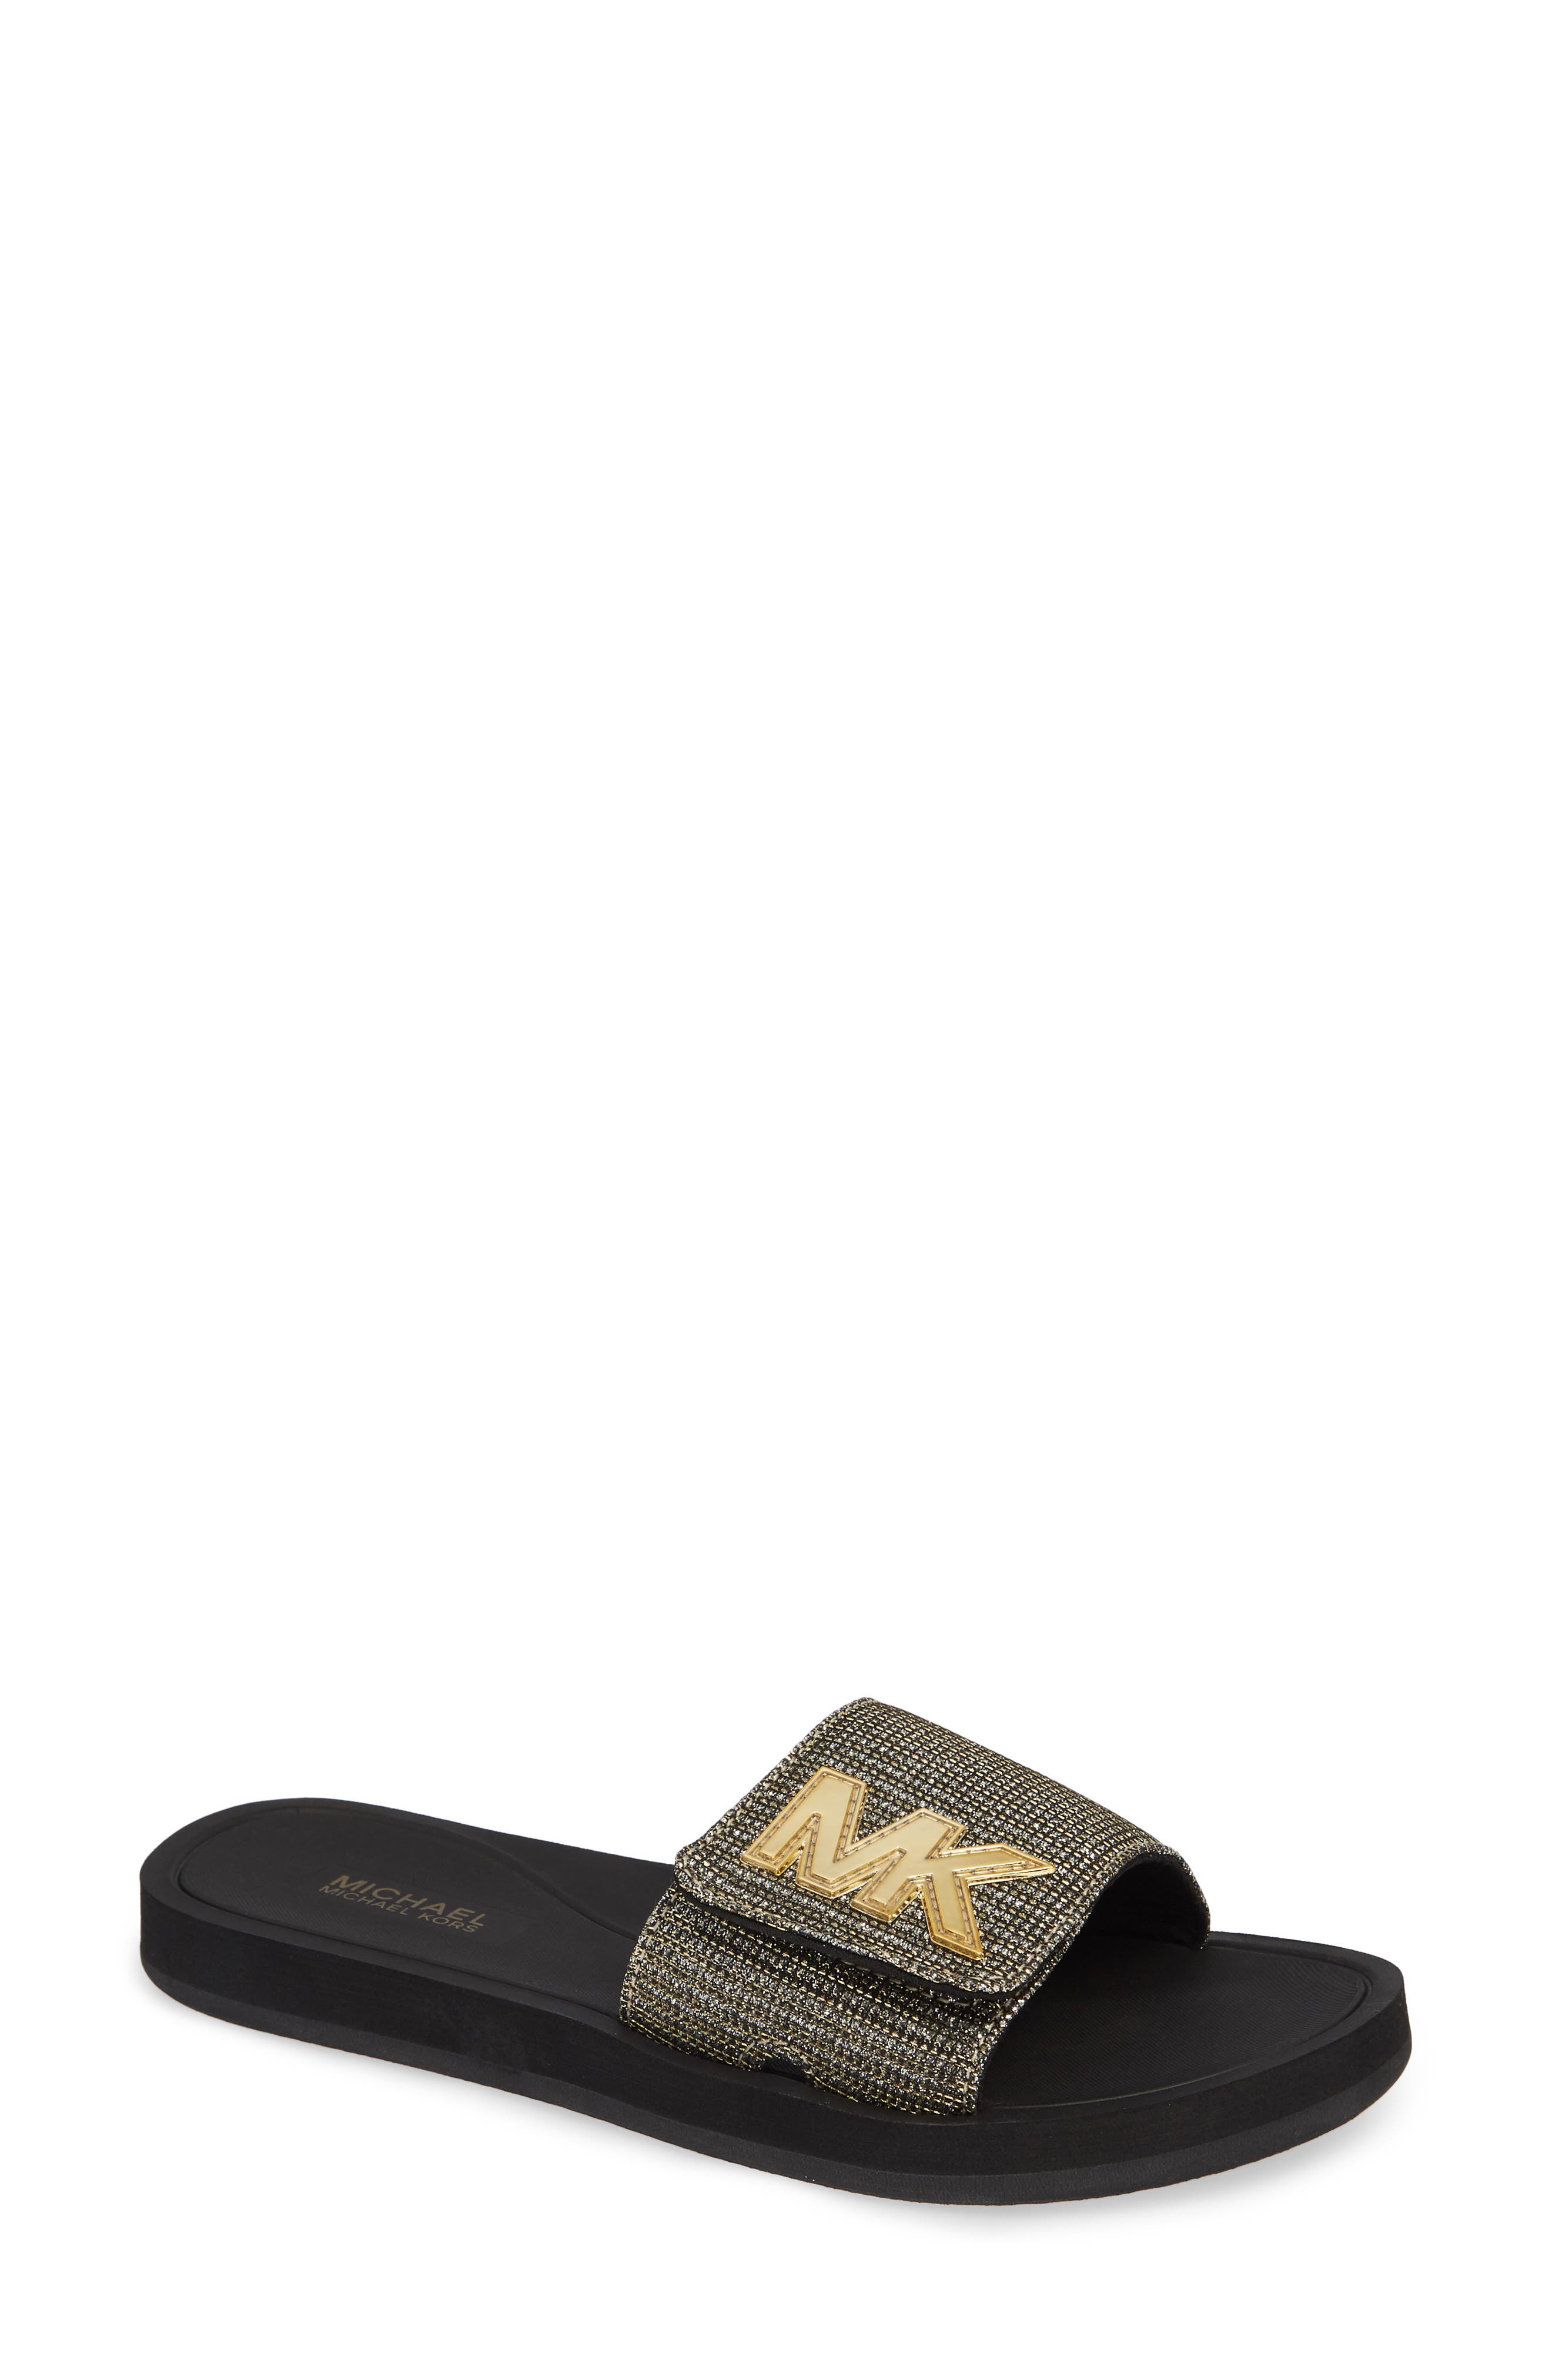 mk sandals for women